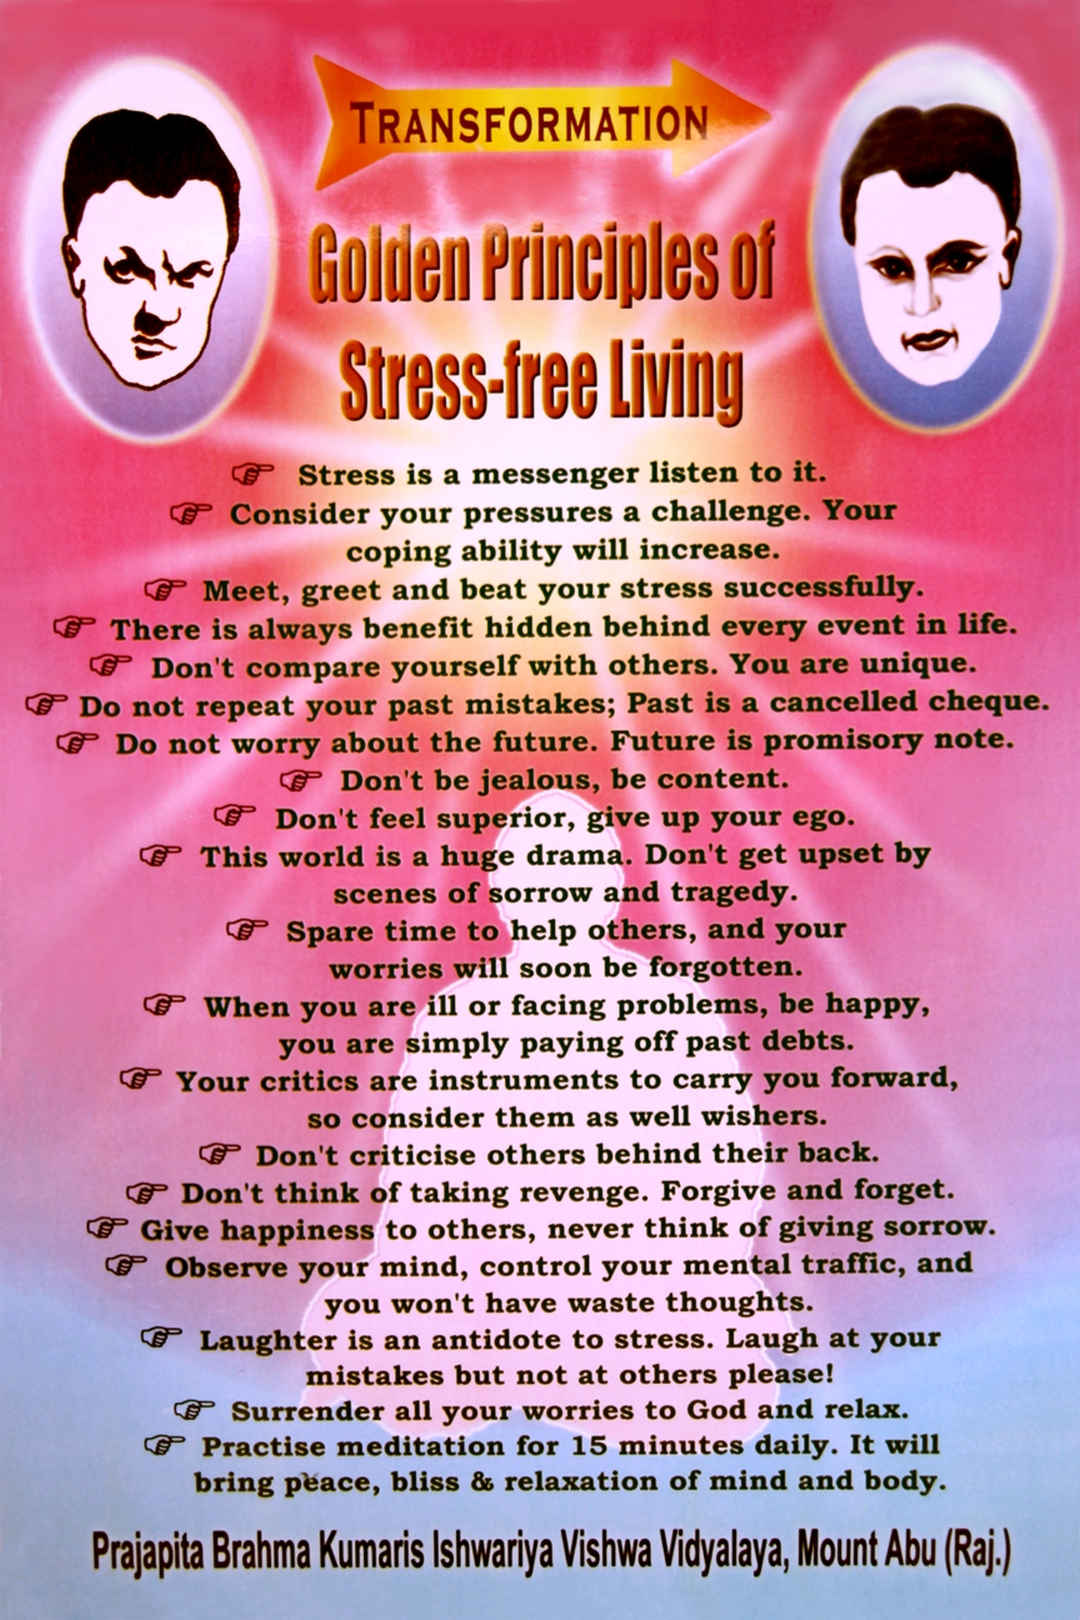 Golden principles of stress-free living